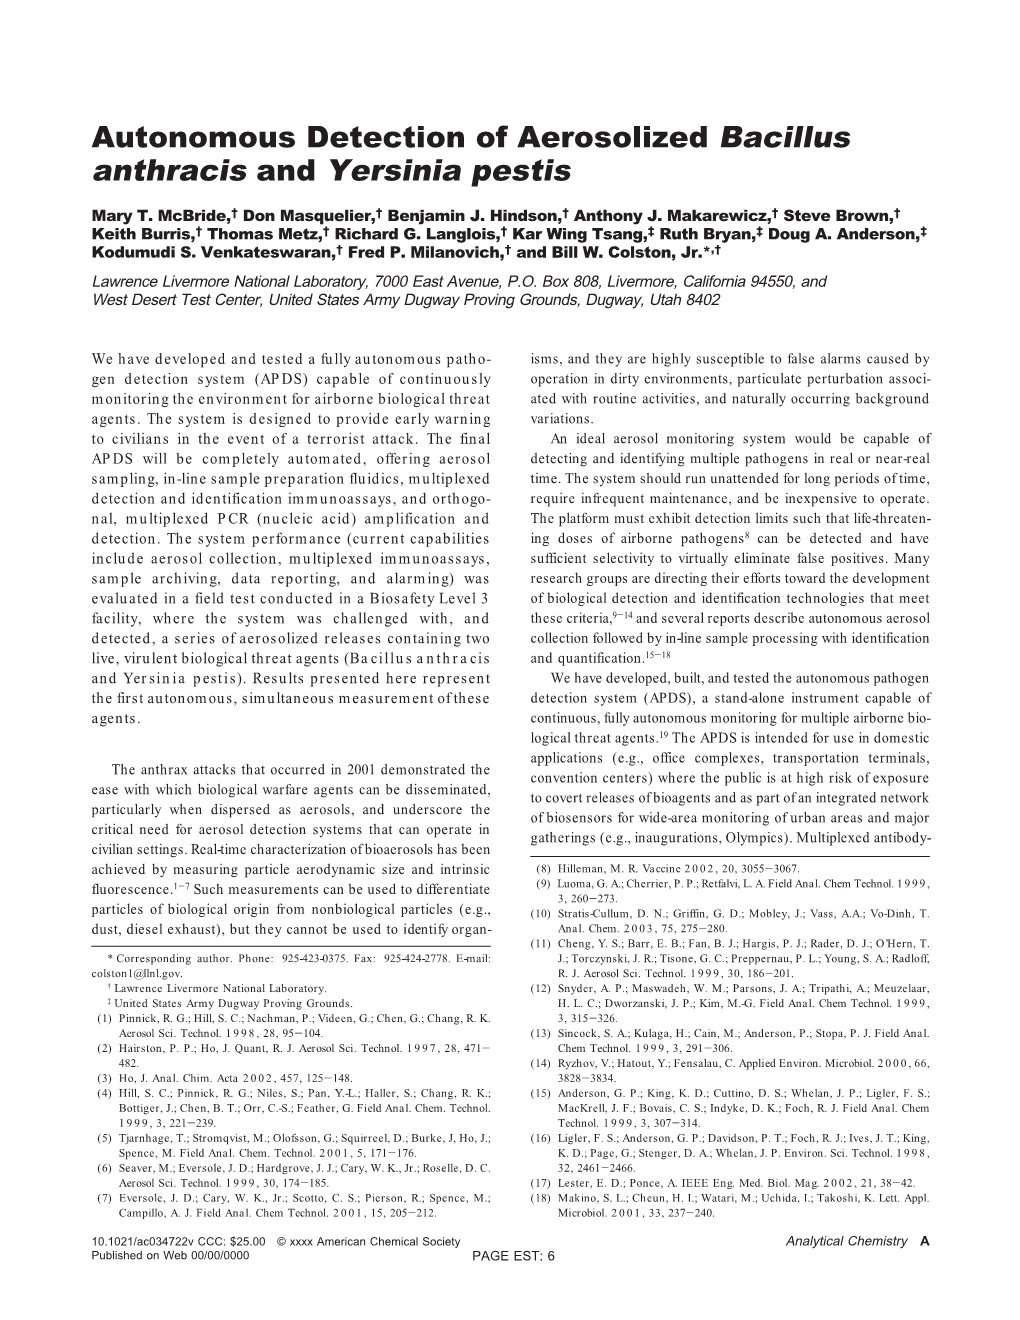 Autonomous Detection of Aerosolized Bacillus Anthracis and Yersinia Pestis